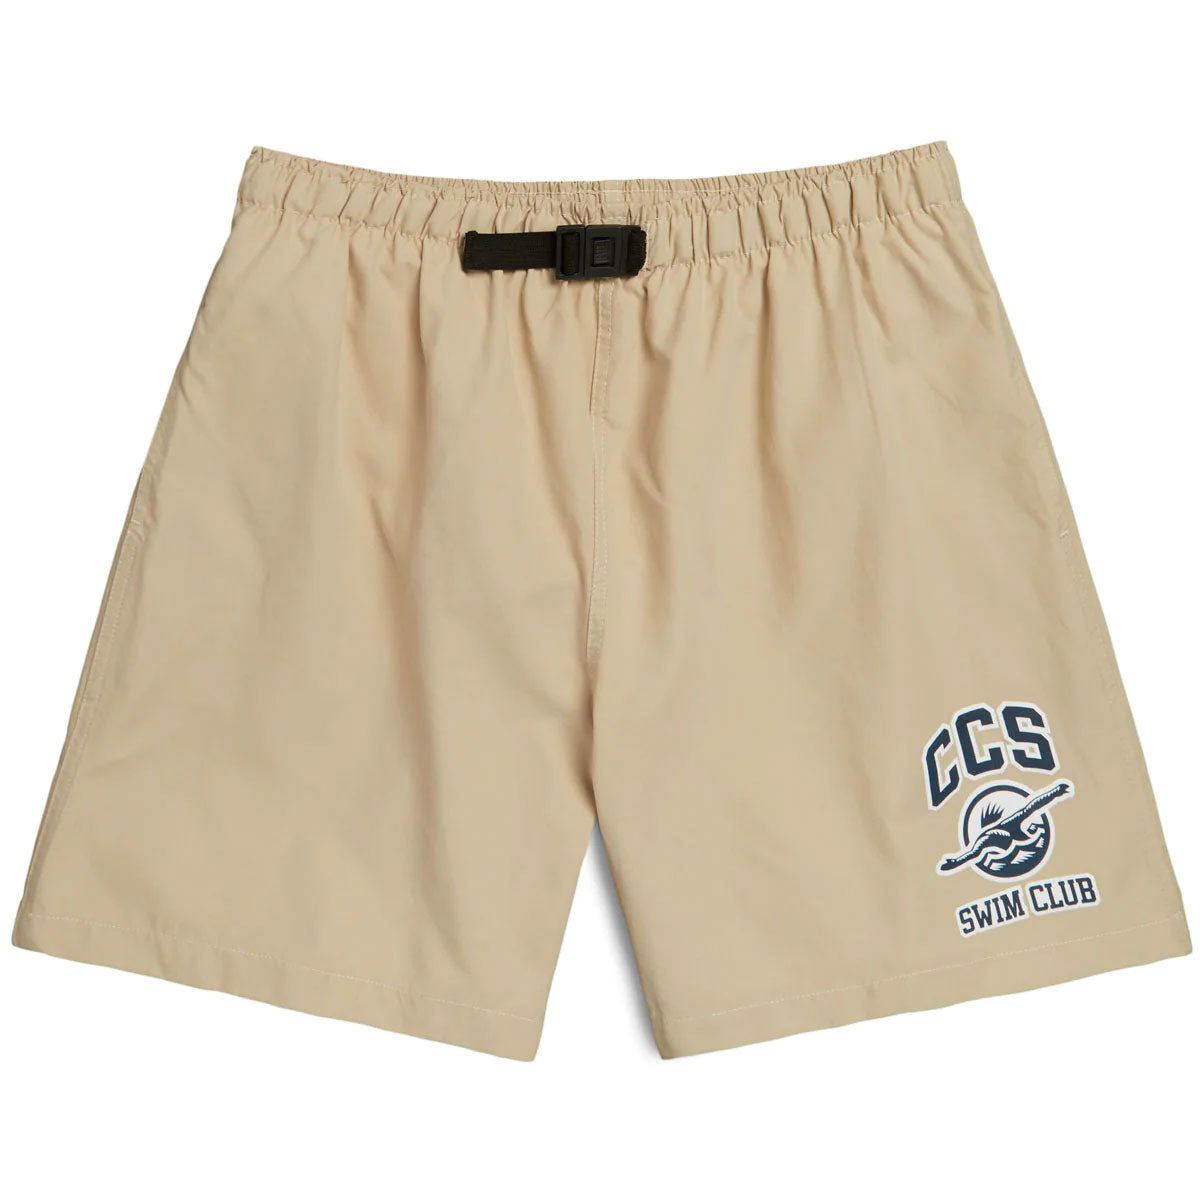 CCS Swim Club Hybrid Shorts - Khaki image 1